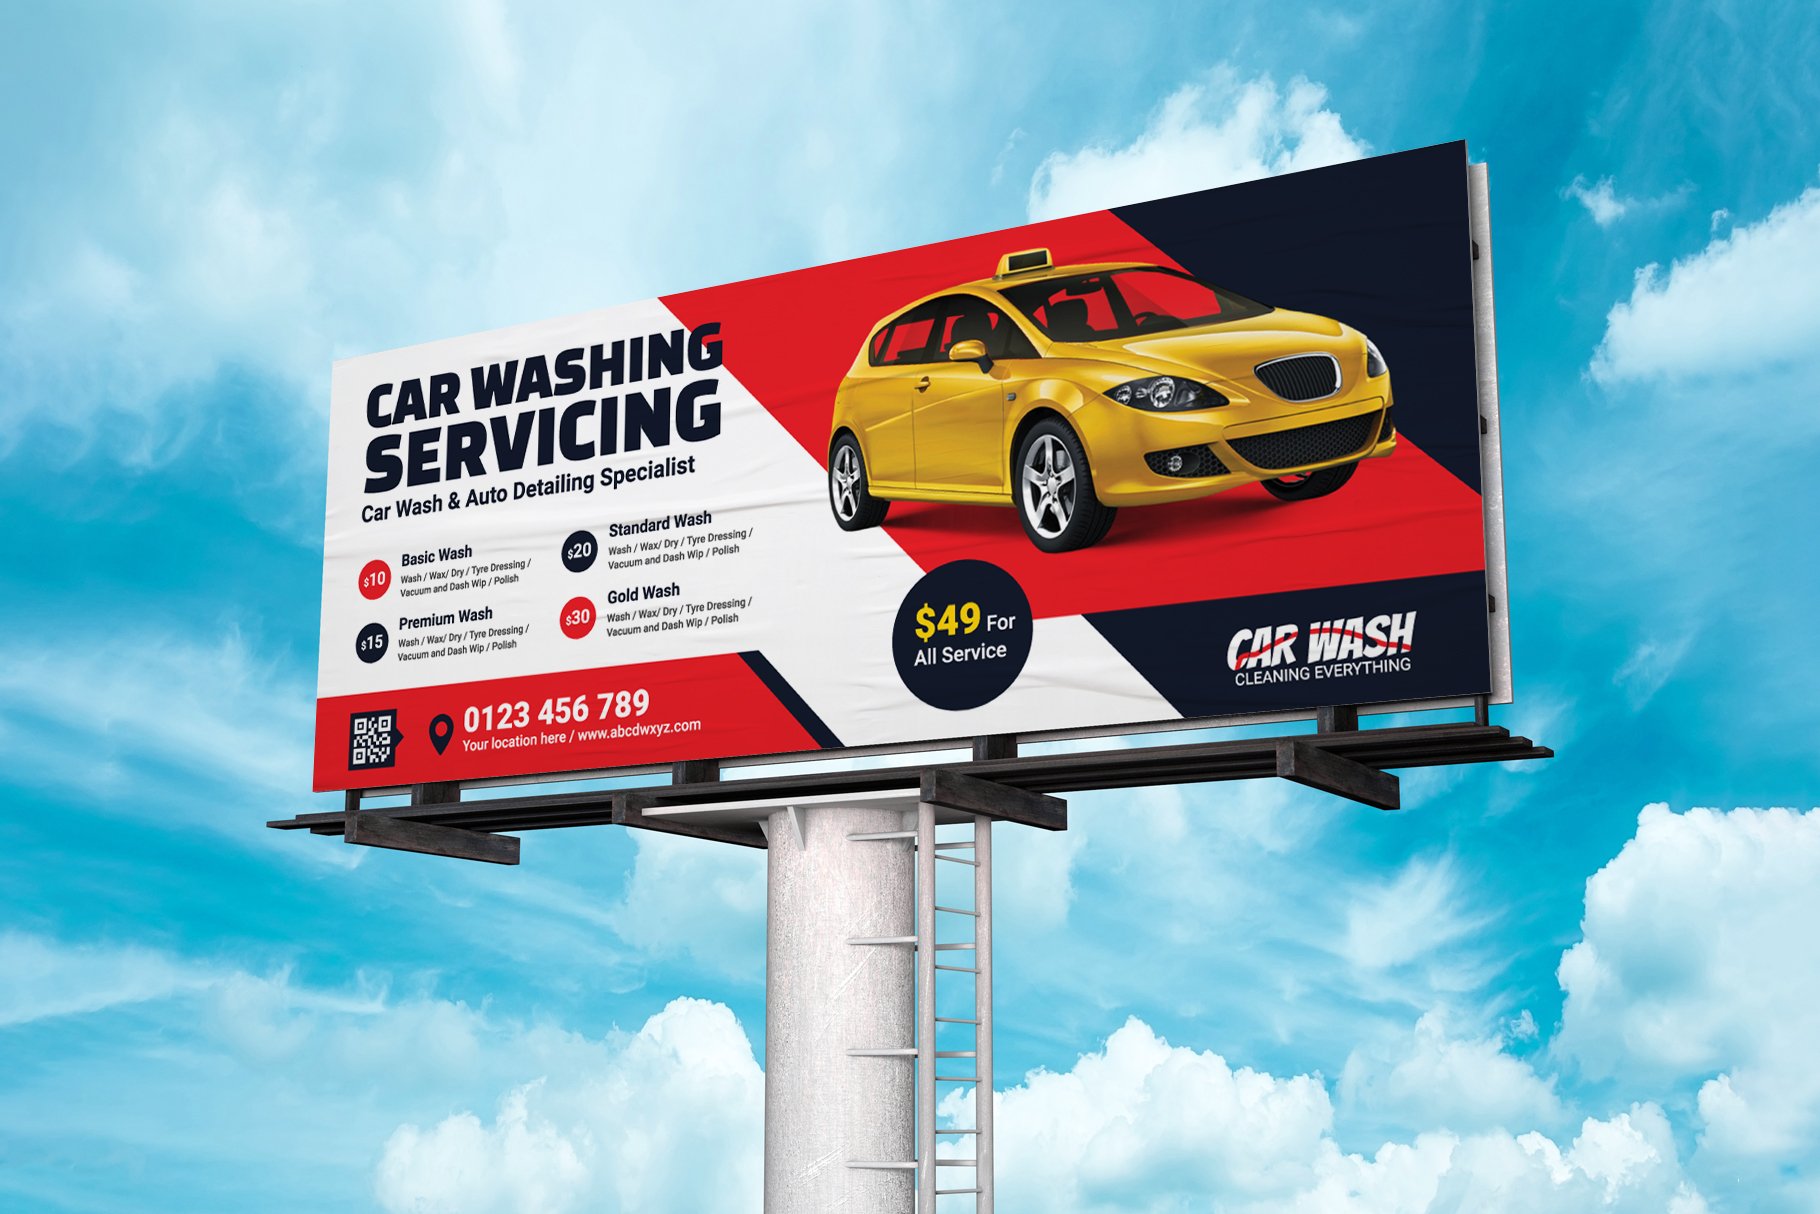 Car Wash Company Billboard Banner cover image.